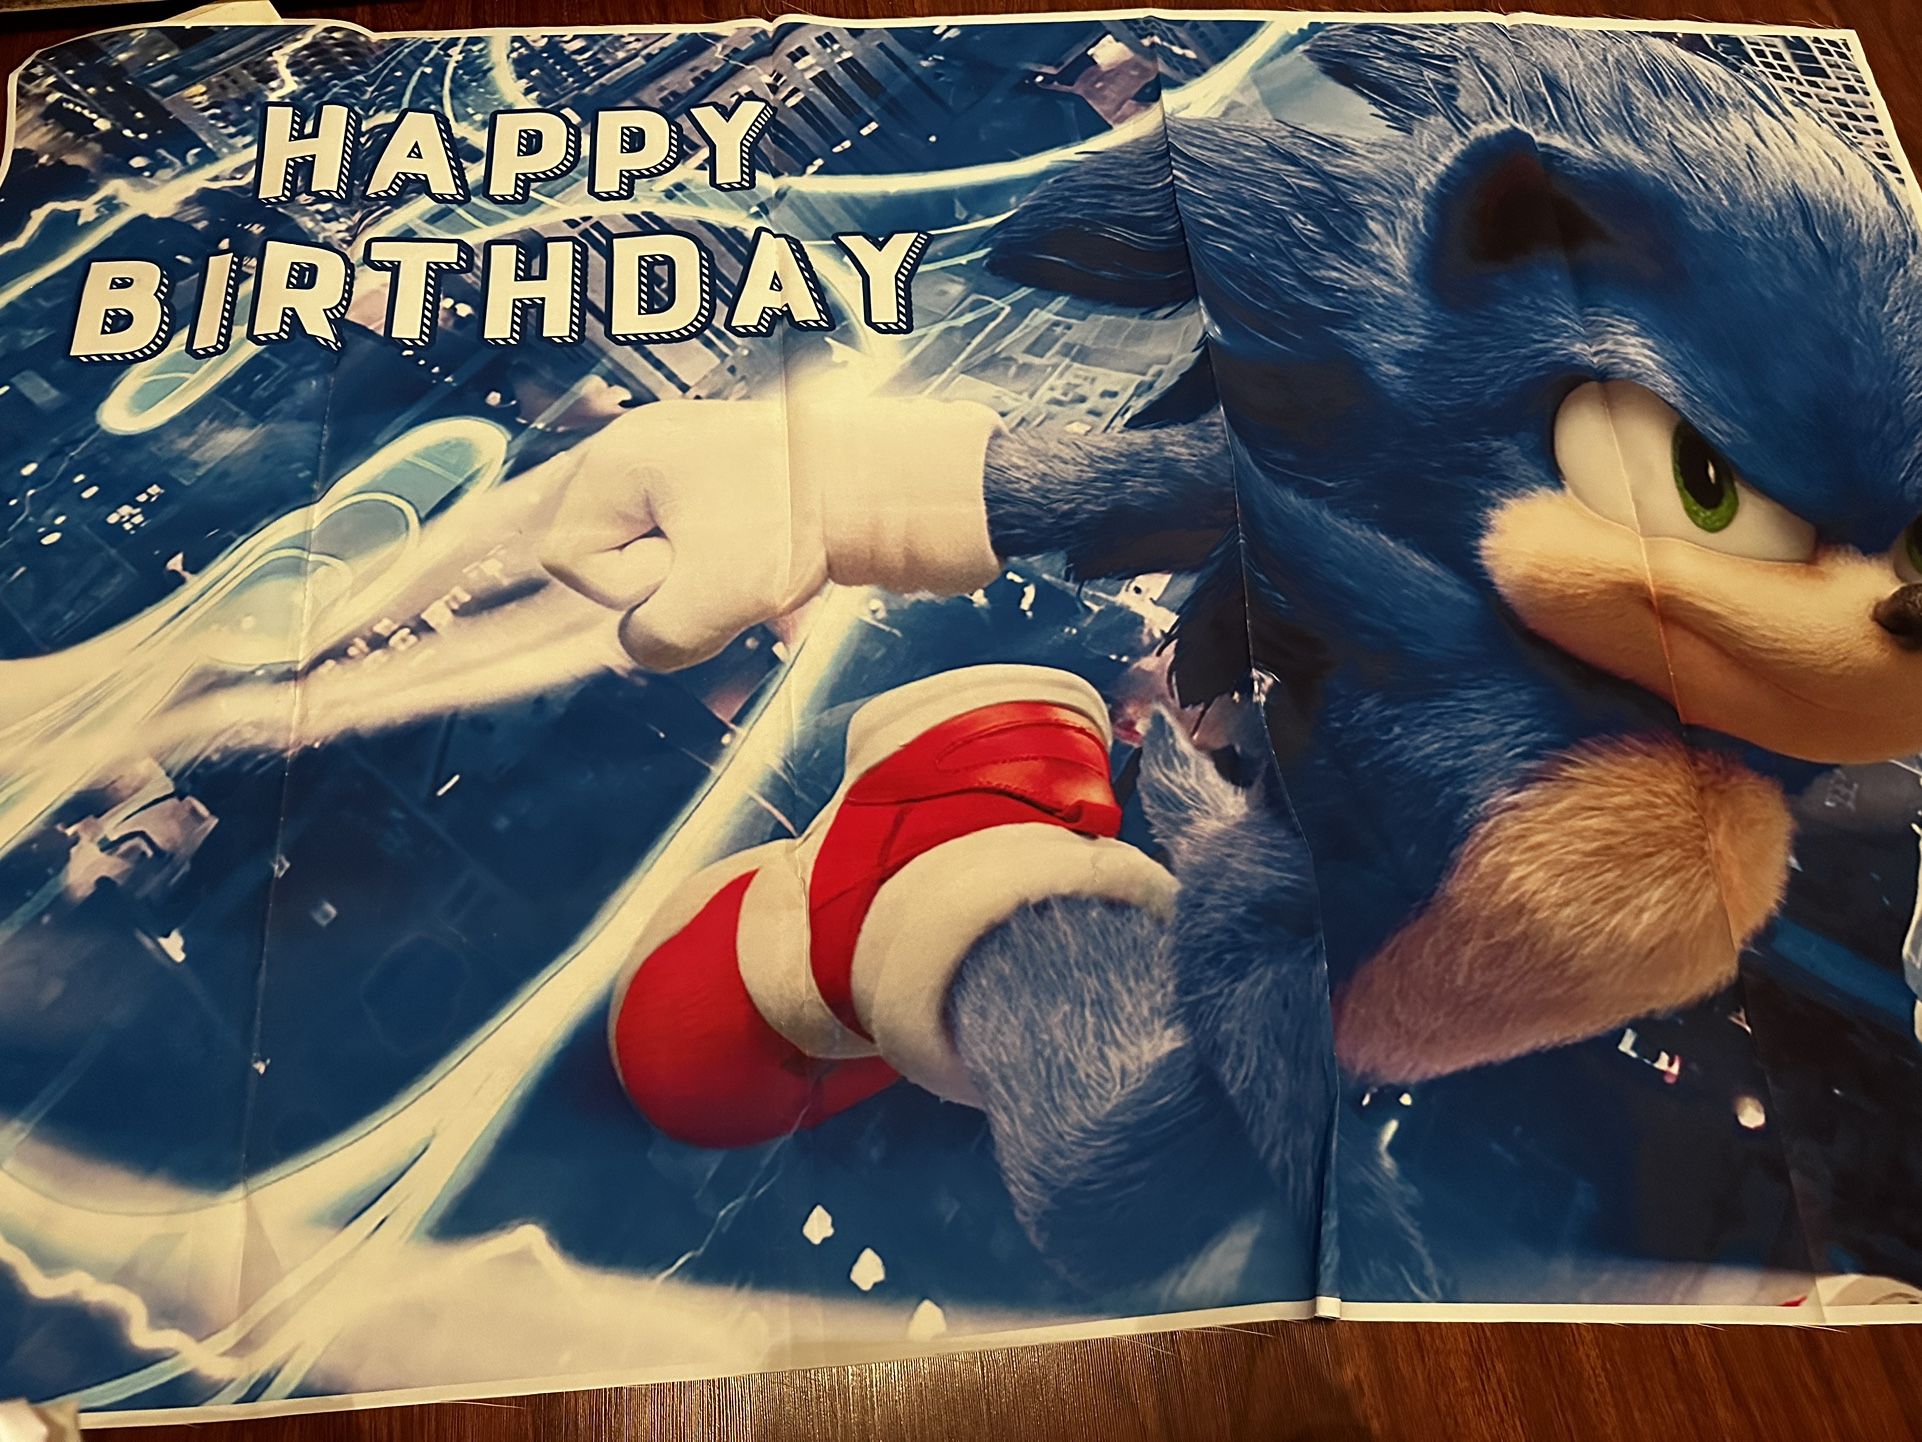  Blue Sonic Hedgehog Happy Birthday  Backdrop 5x3ft$6